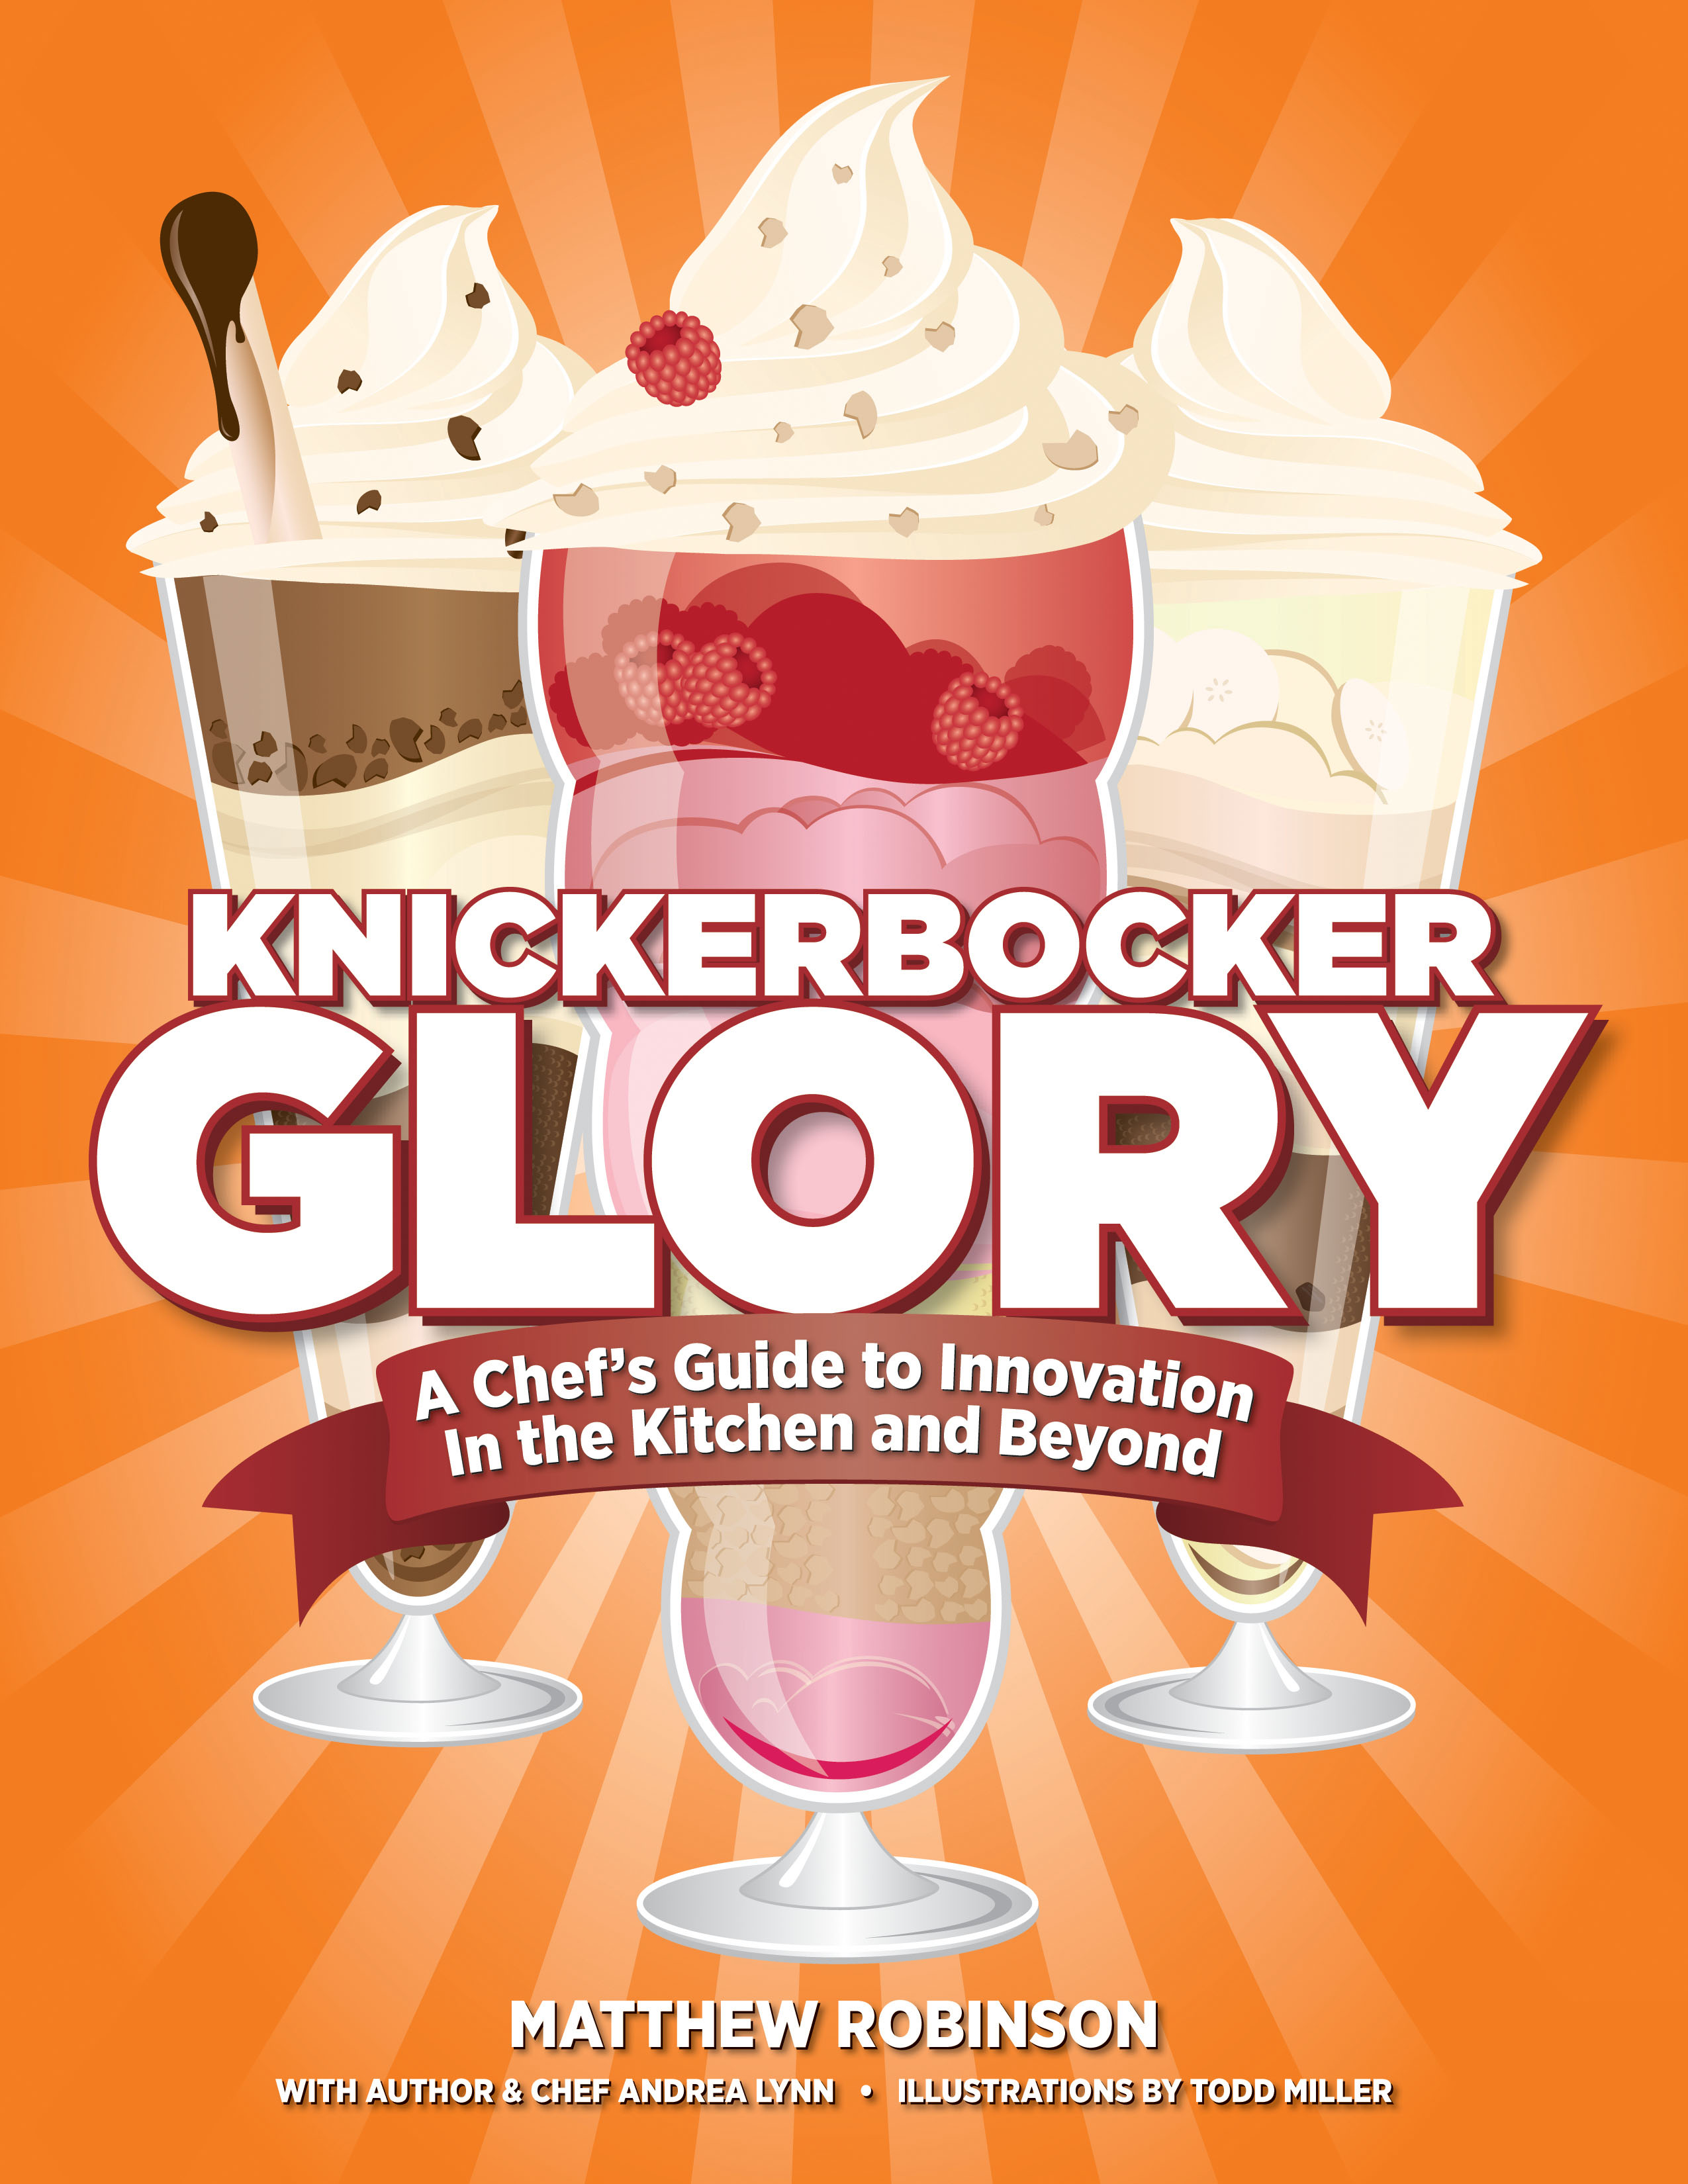 Knickerbocker Glory by Matthew Robinson